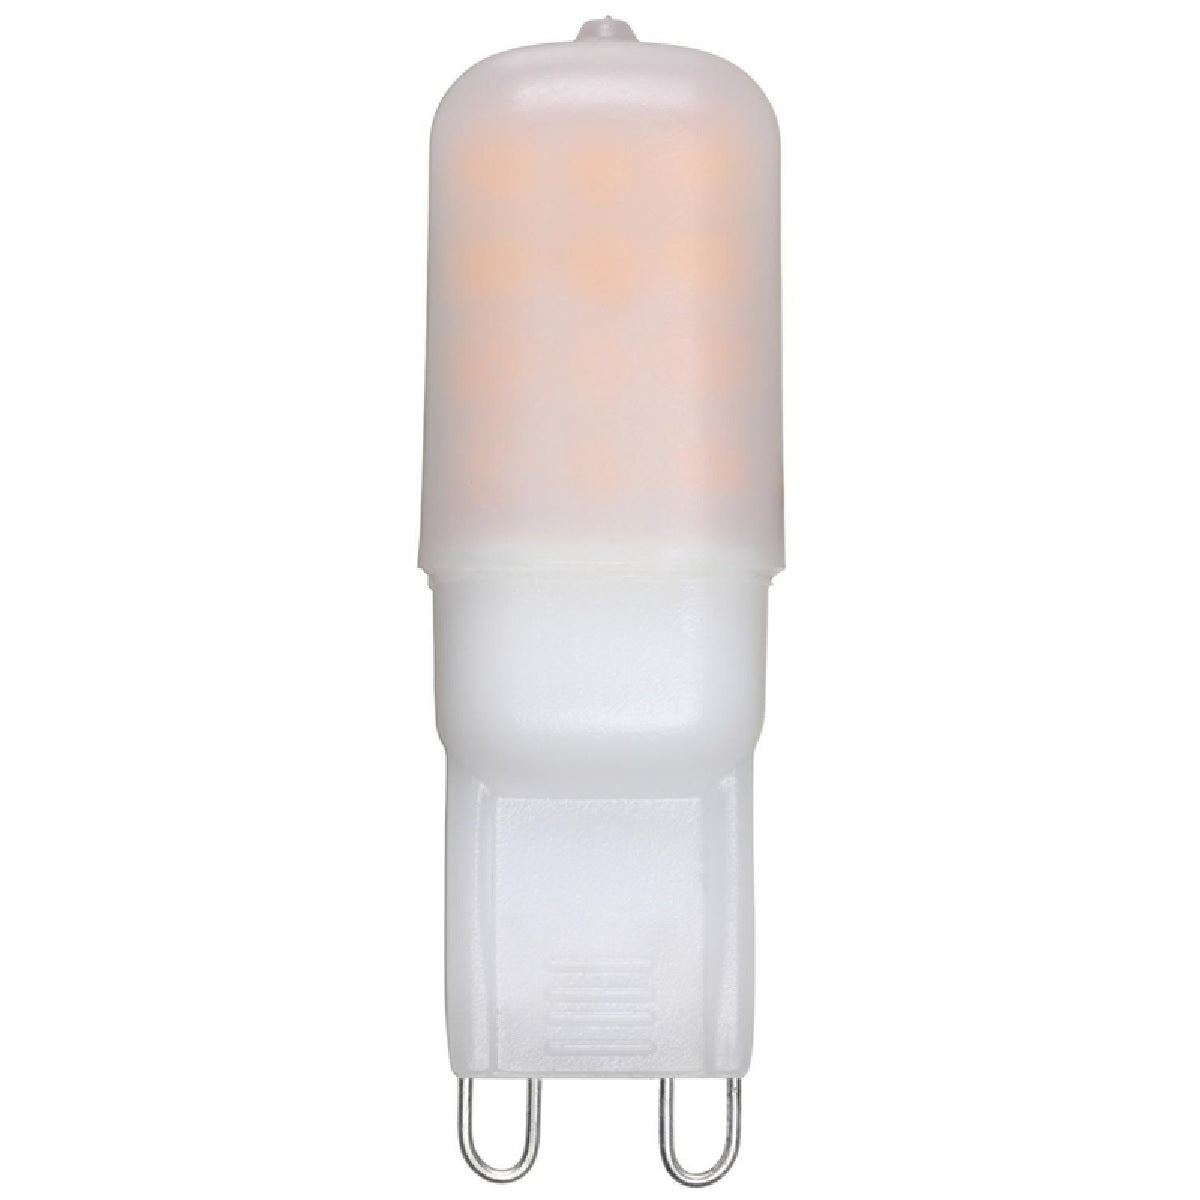 Westinghouse 0318500 25W Equivalent Bright White G9 LED Light Bulb, 3000 K